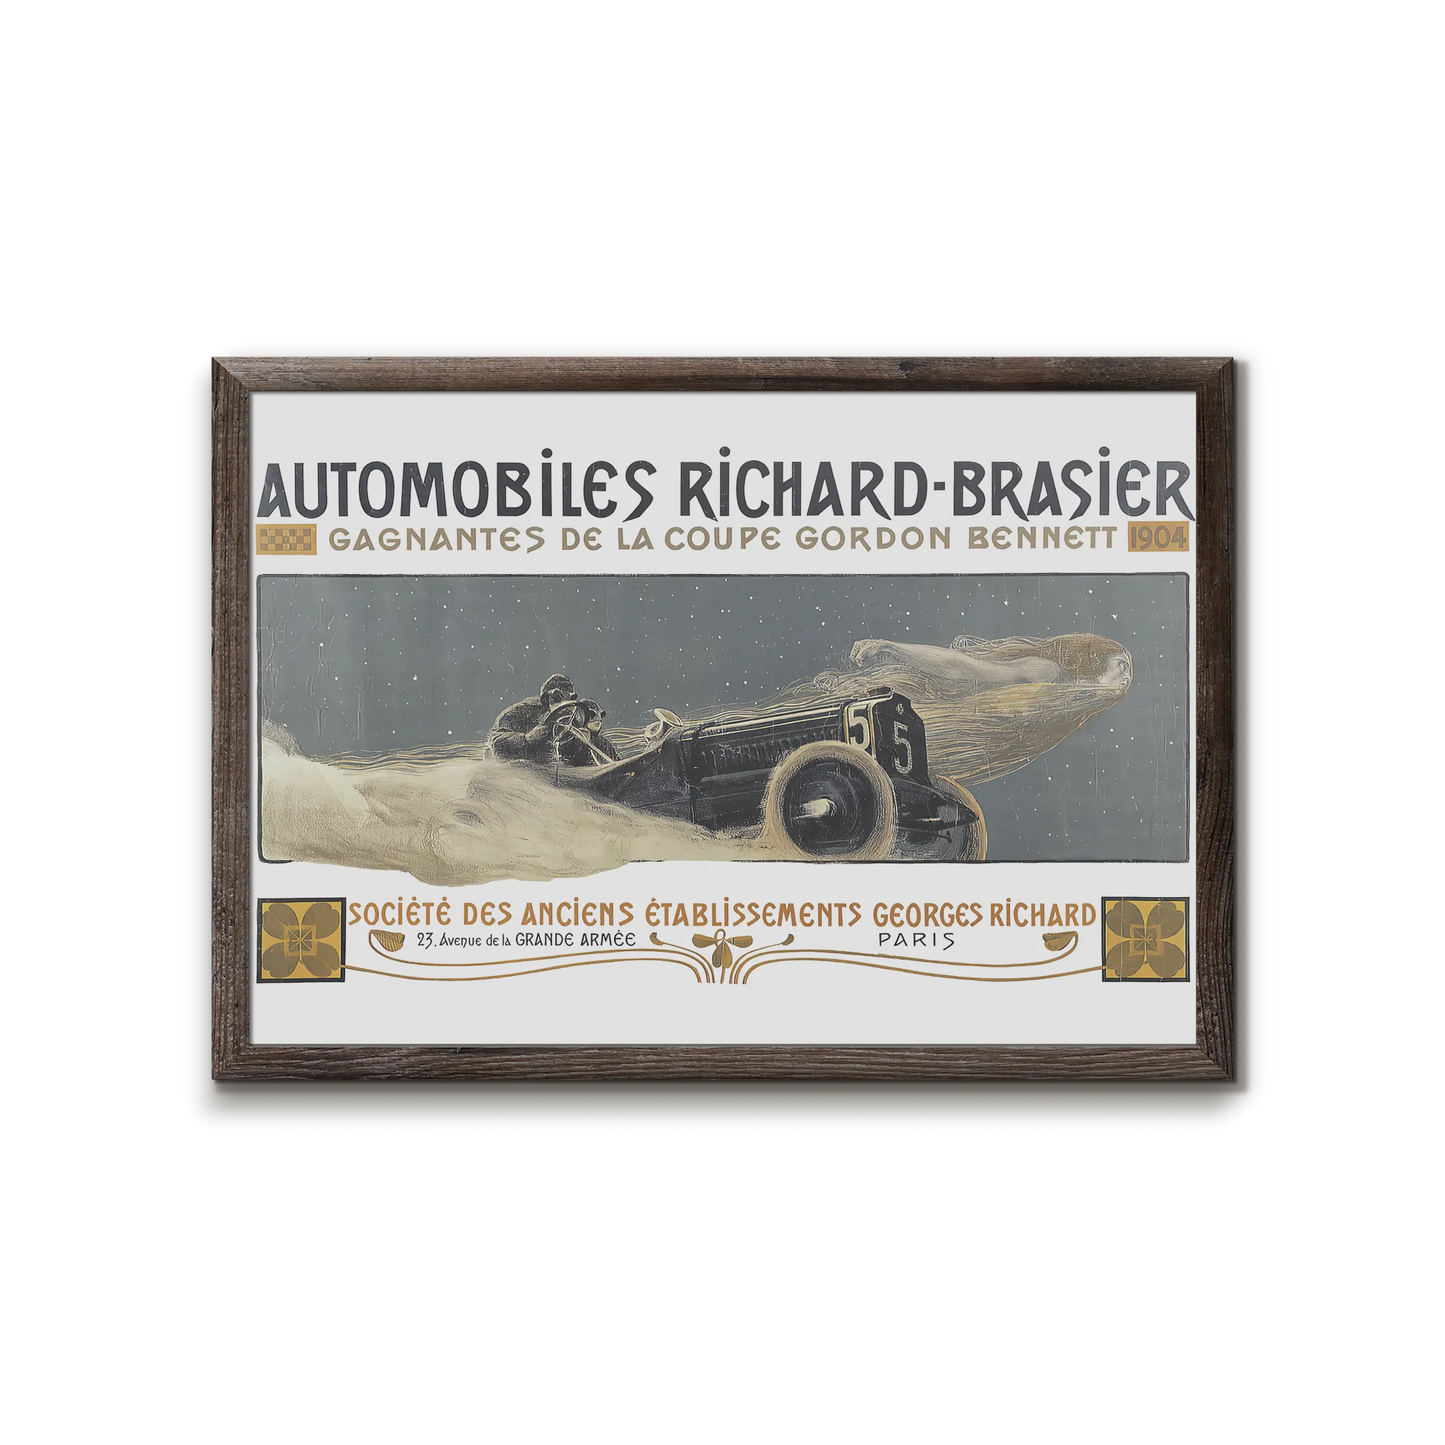 Automobiles Richard-Brasier - classic car advertising